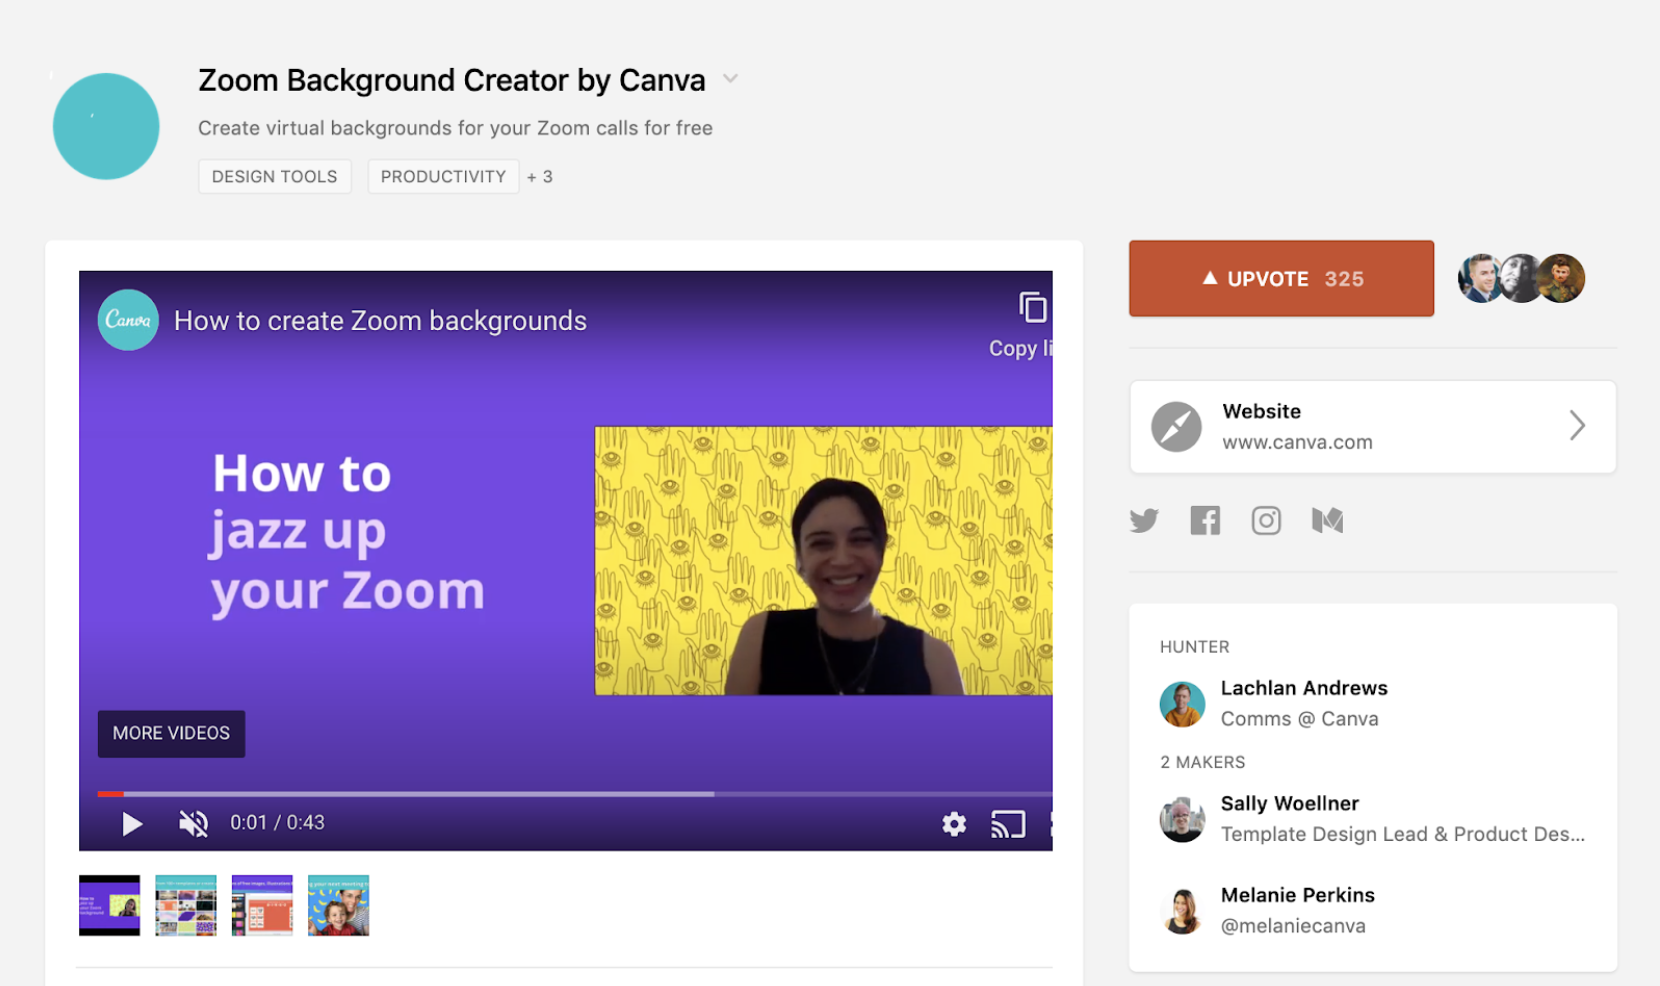 Zoom Background Creator - Top4 Marketing